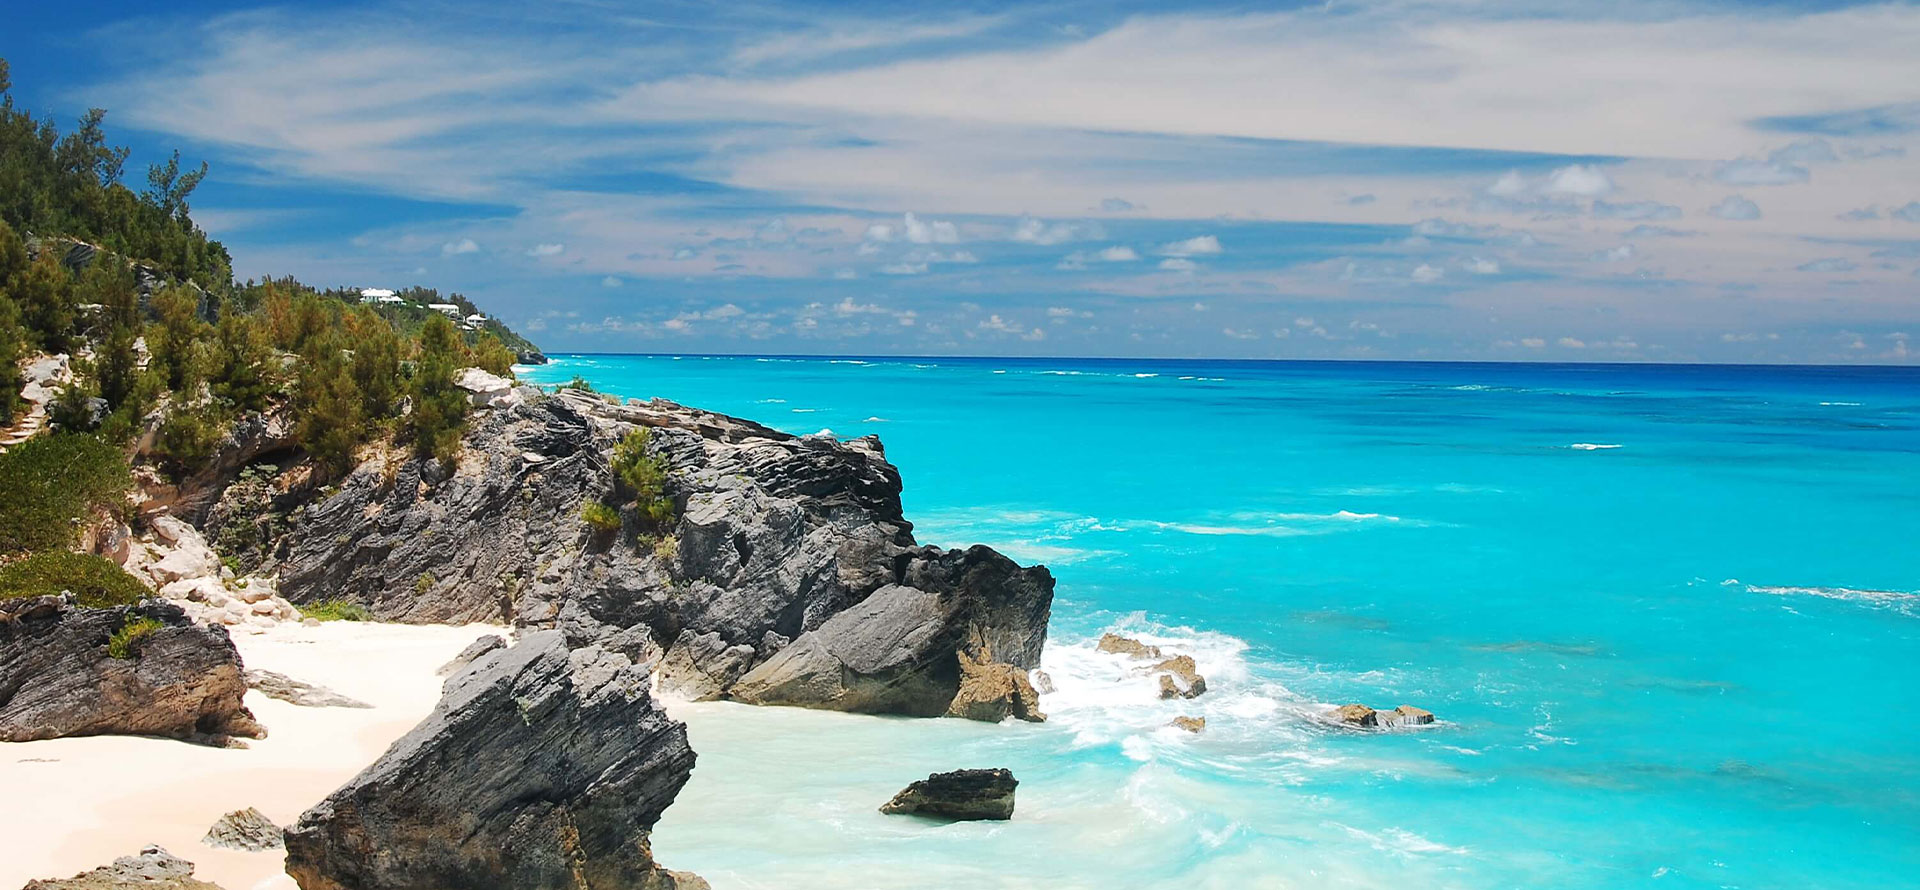 Bermuda honeymoon landscape.